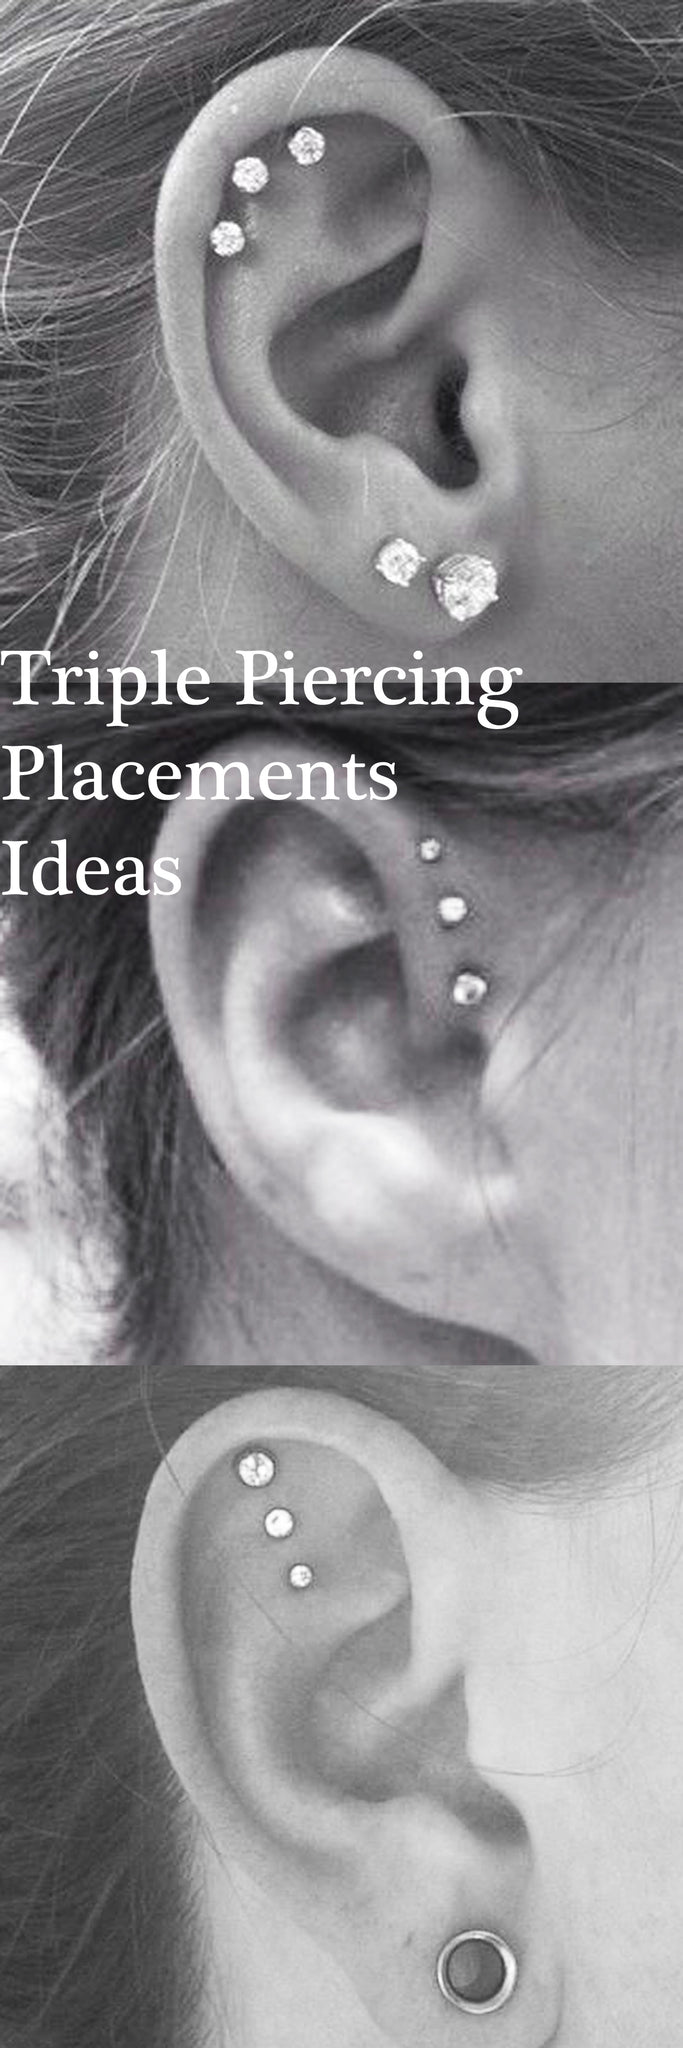 Cute Ear Piercing Ideas at MyBodiArt.com - Triple Forward Helix Earrings - Triple Cartilage Constellation Studs